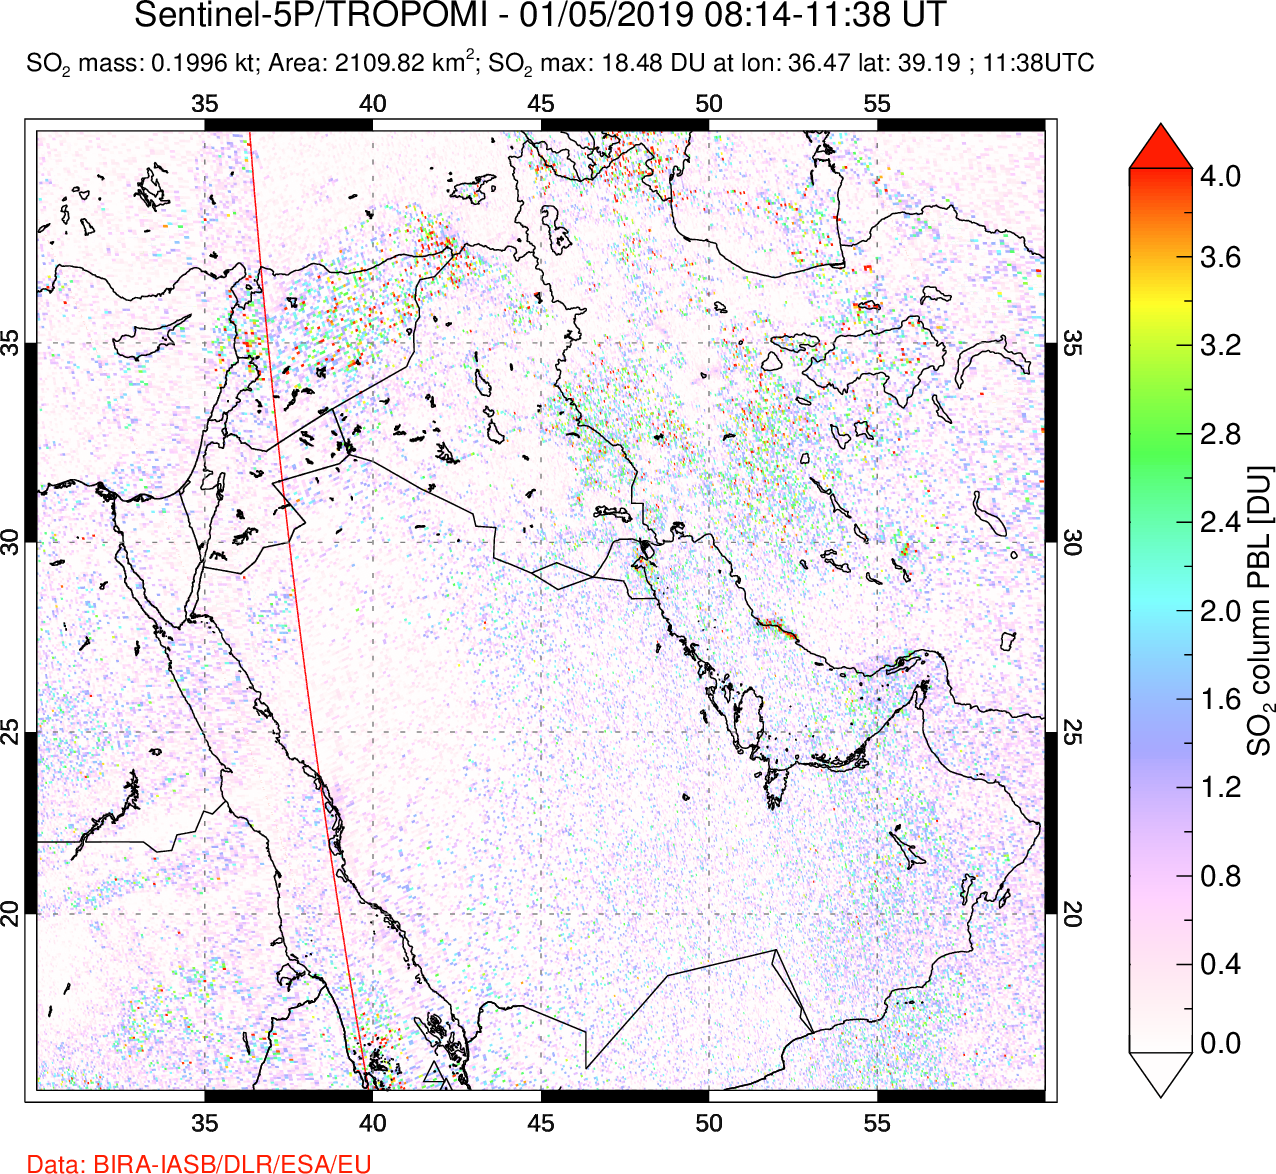 A sulfur dioxide image over Middle East on Jan 05, 2019.